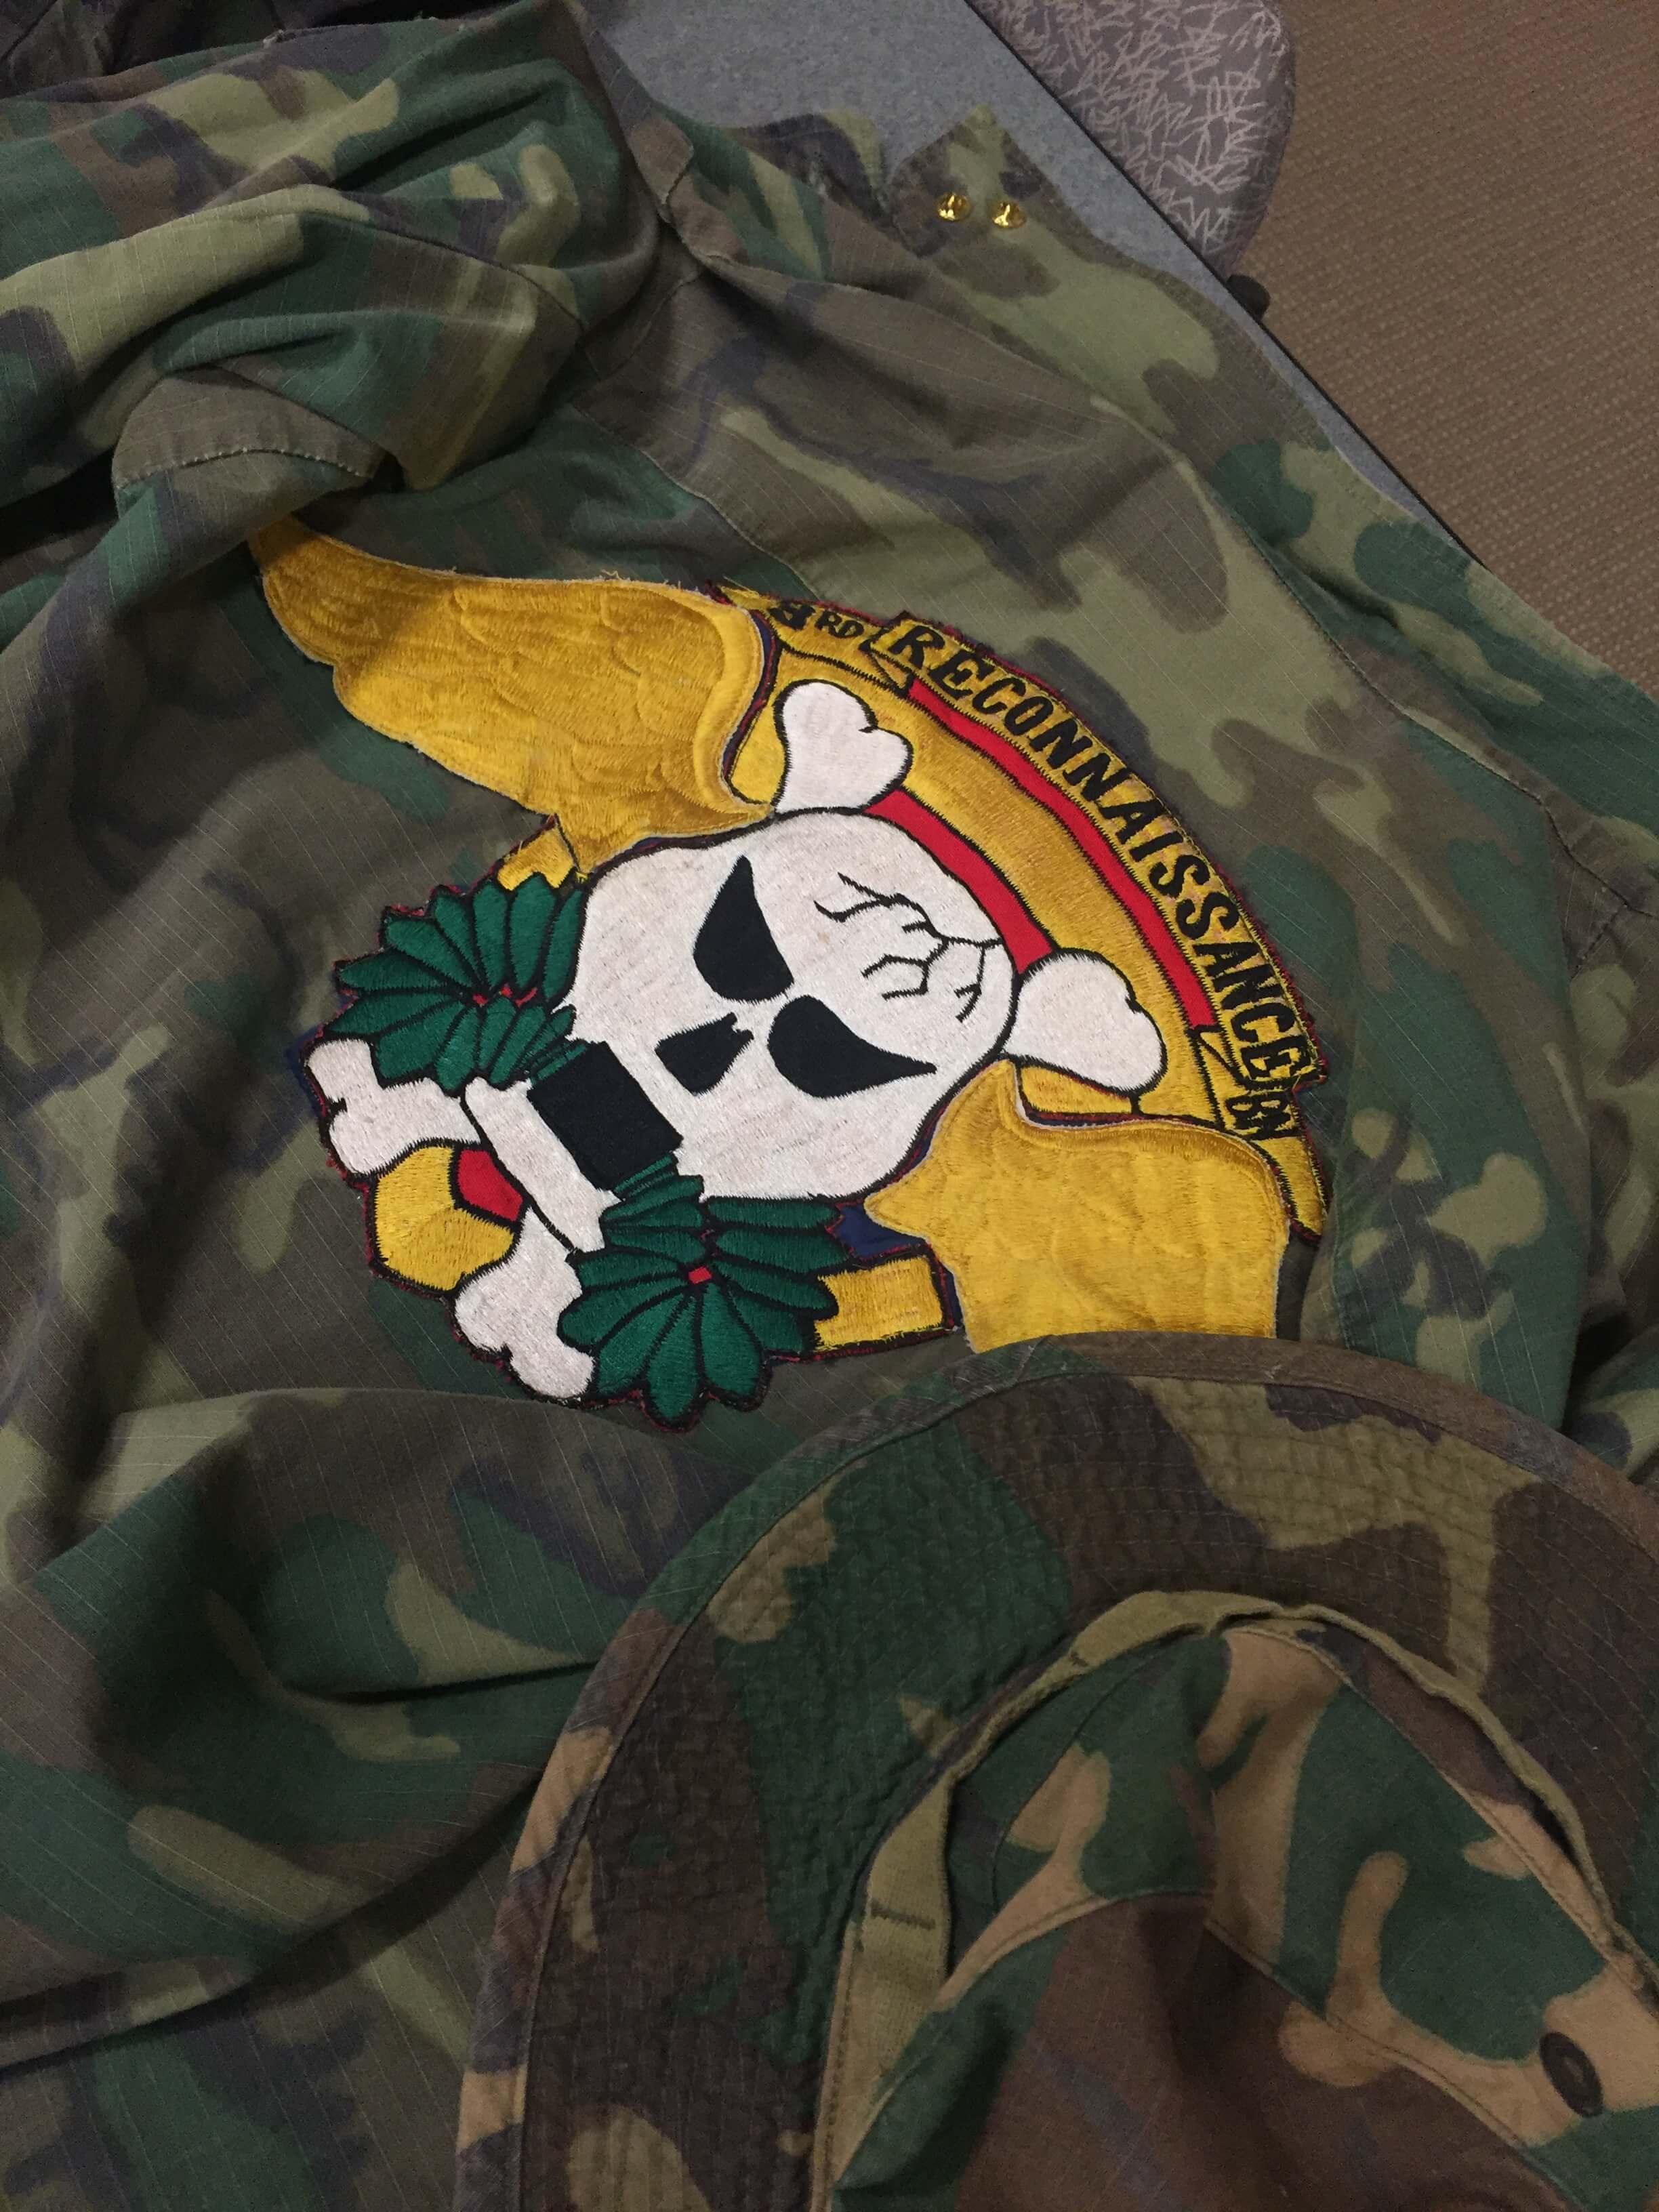 Vietnam veteran jacket